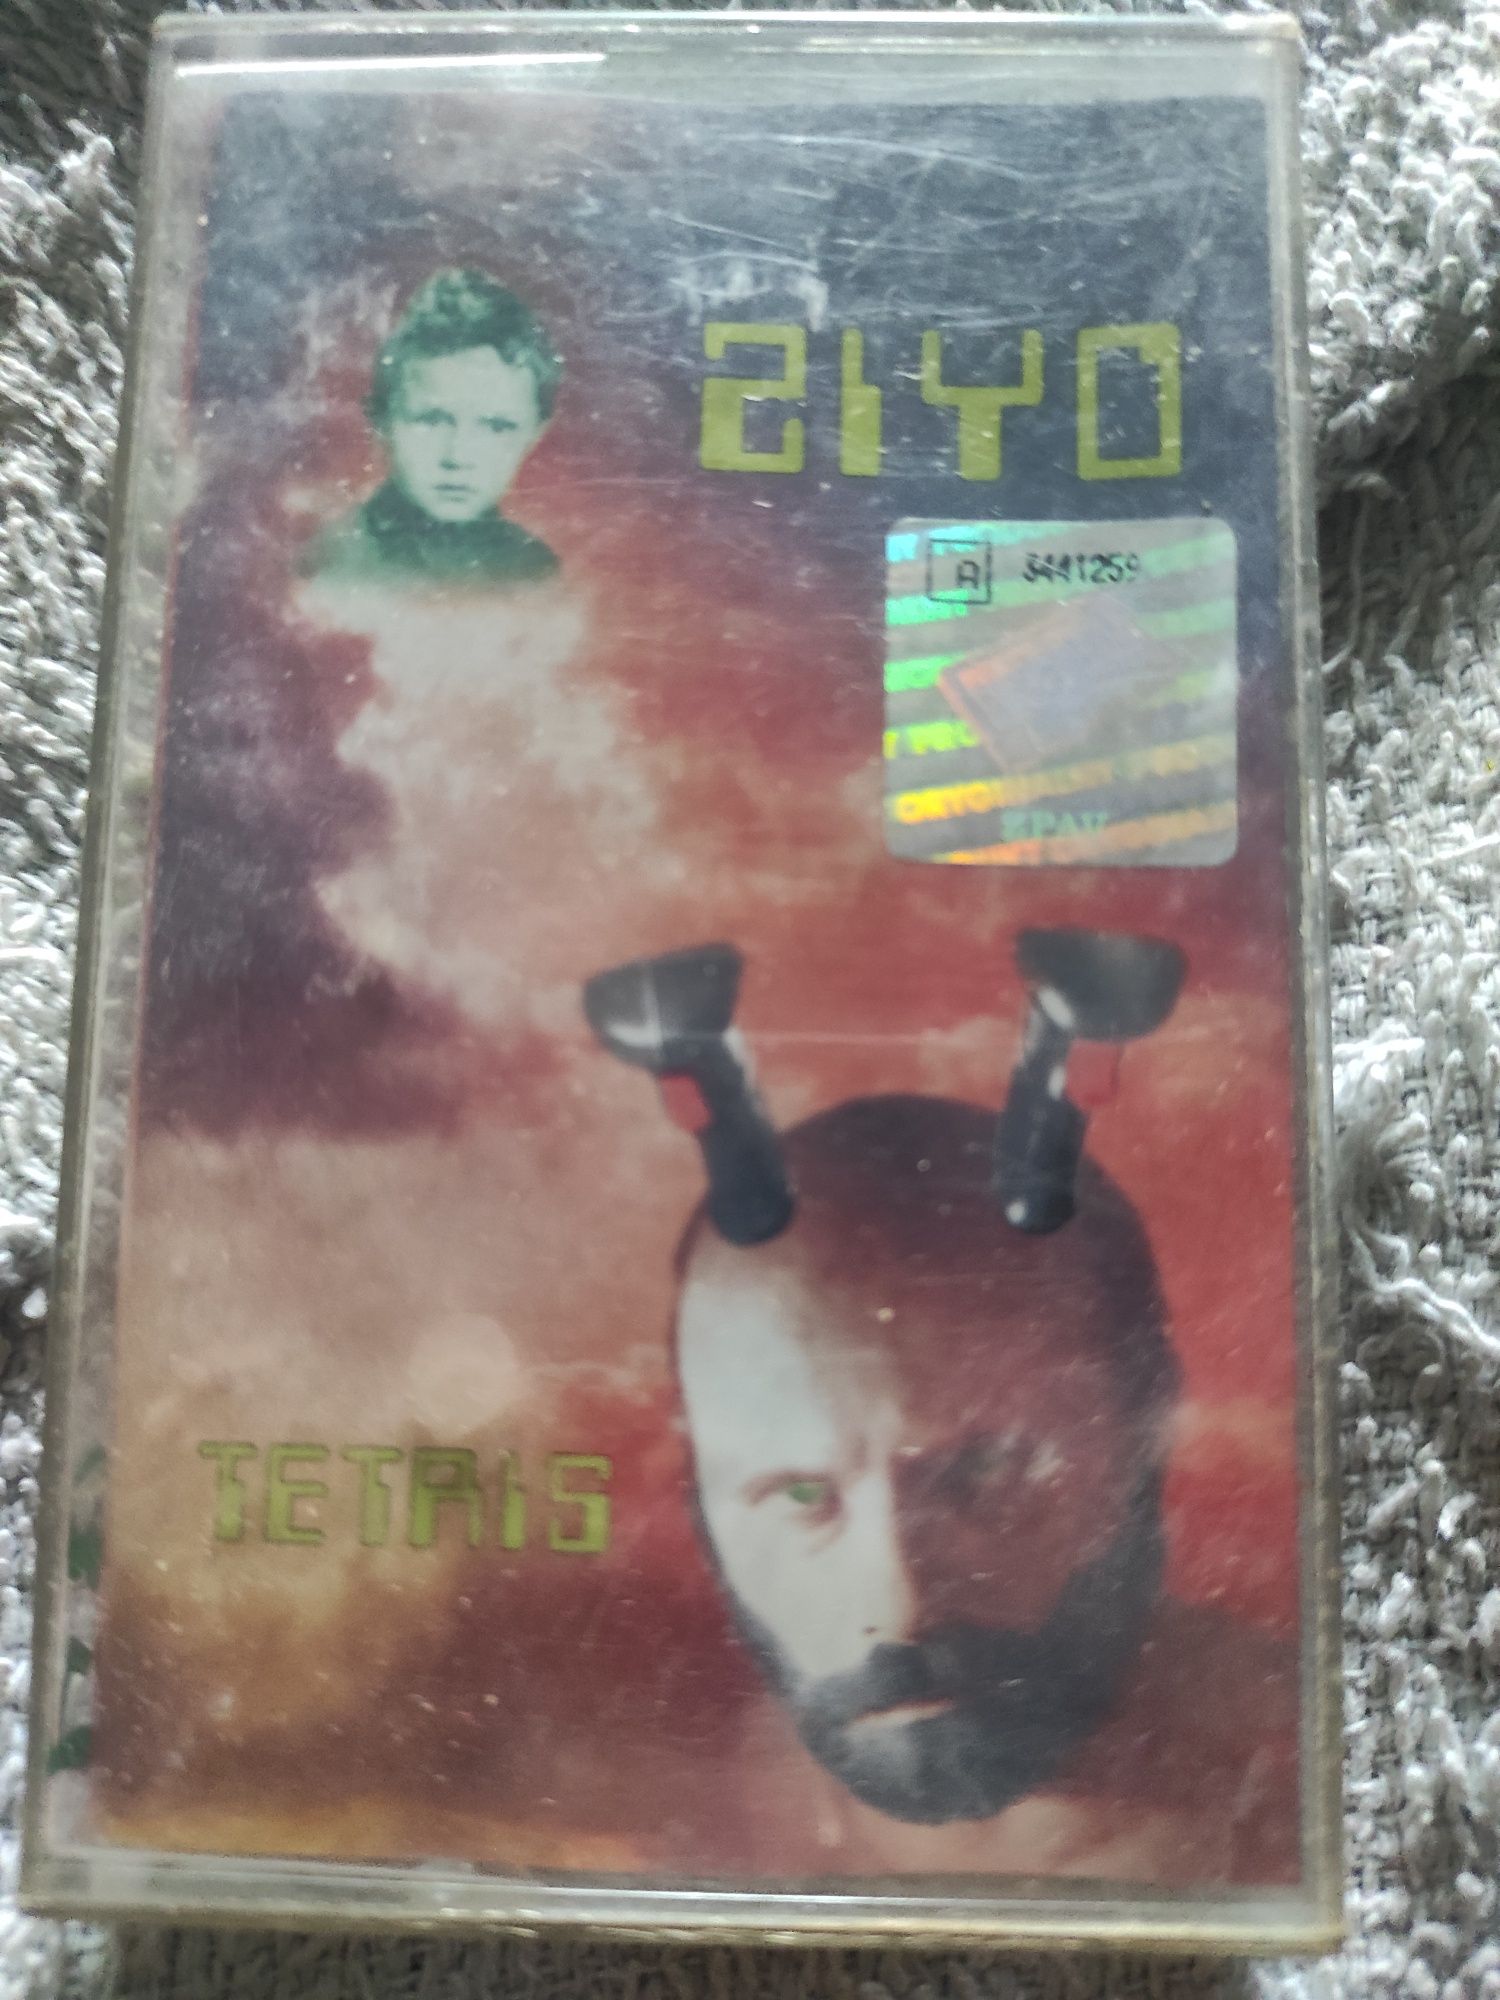 Ziyo Tetris kaseta magnetofonowa